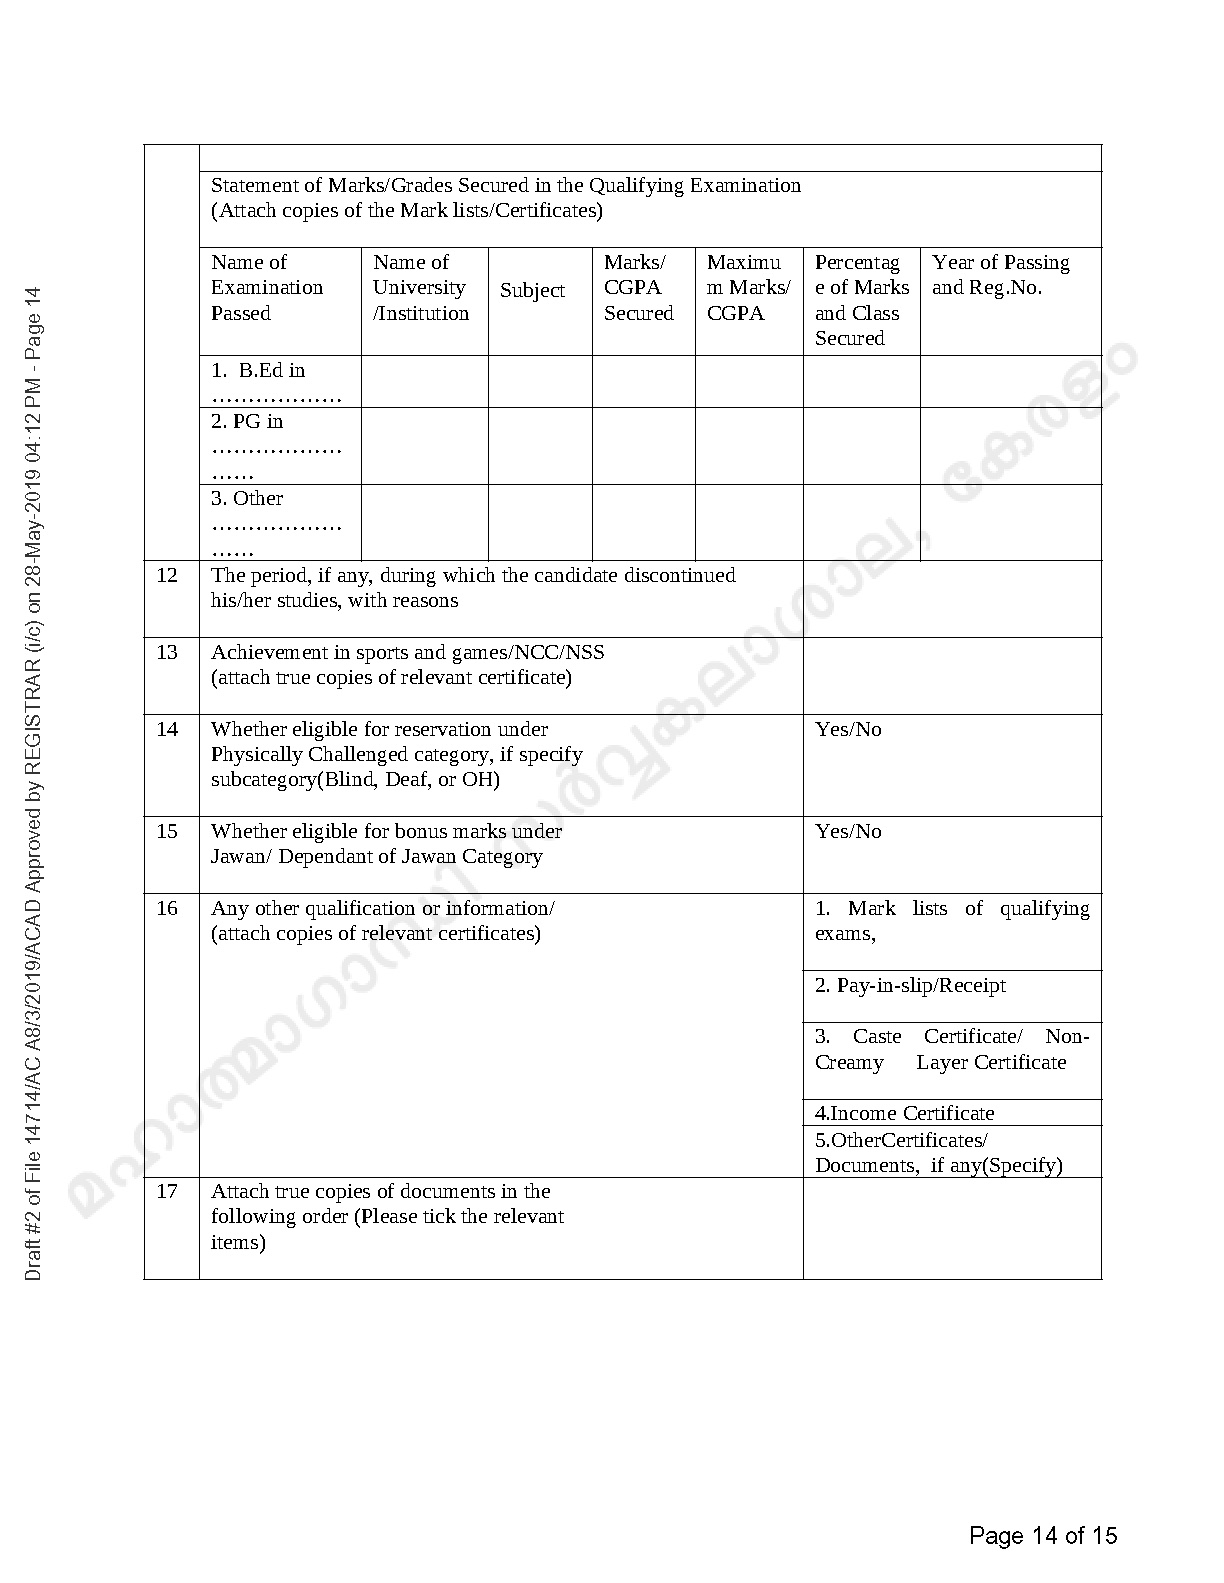 MG University M Ed Prospectus and Application form 2019 2020 - Notification Image 12